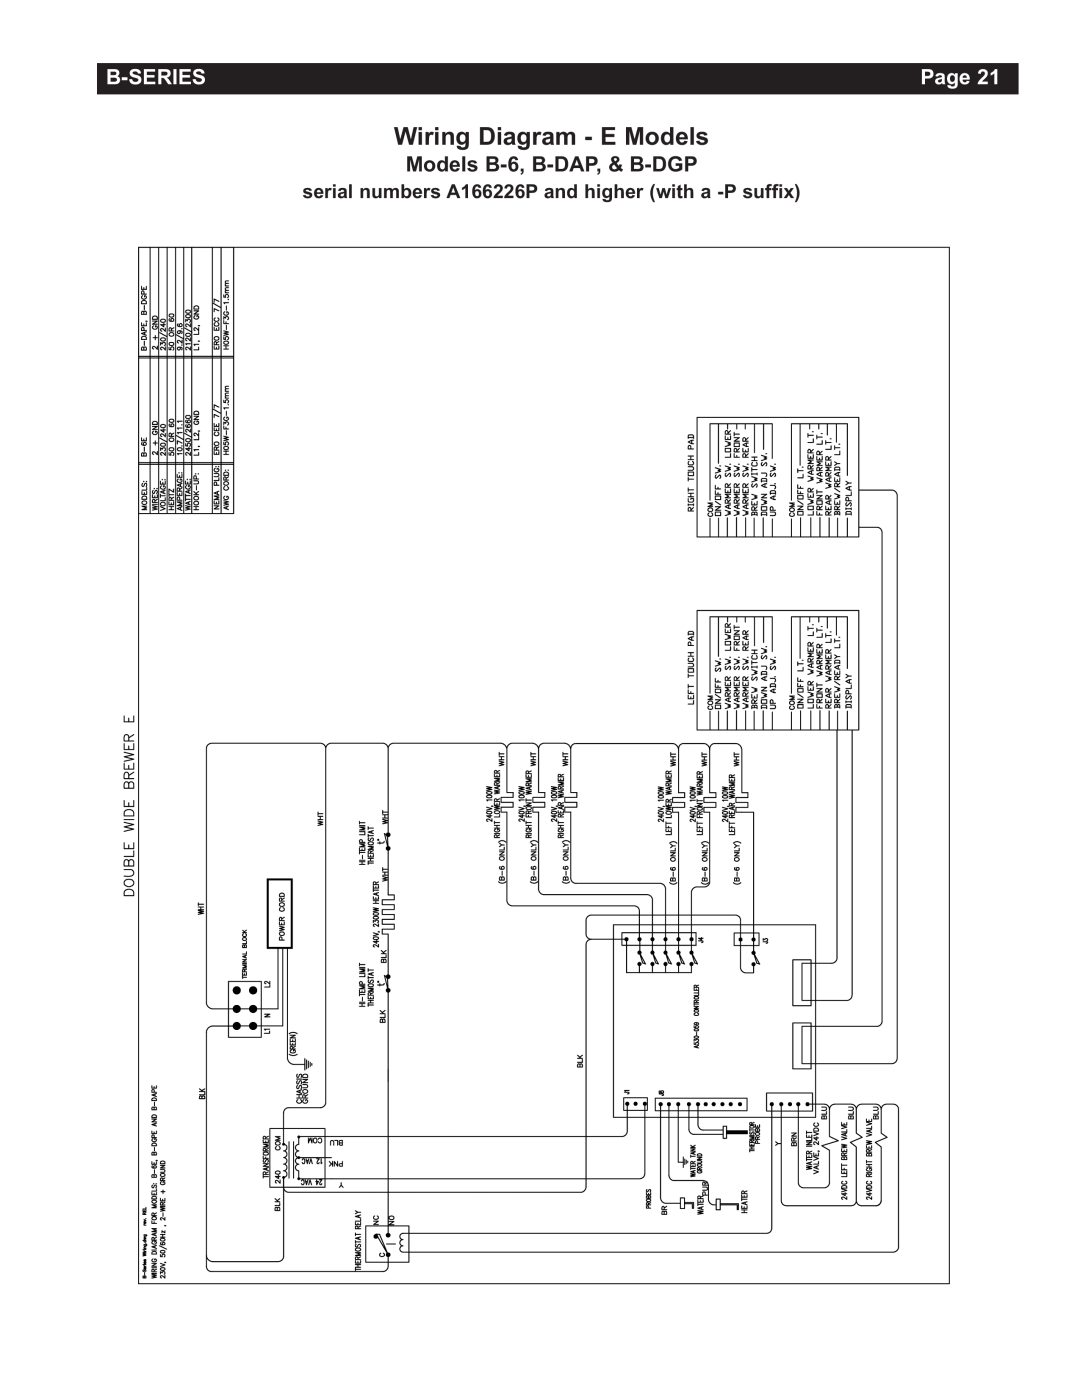 Grindmaster AMW B-Series manual Wiring Diagram - E Models, Page, Models B-6, B-DAP, & B-DGP 